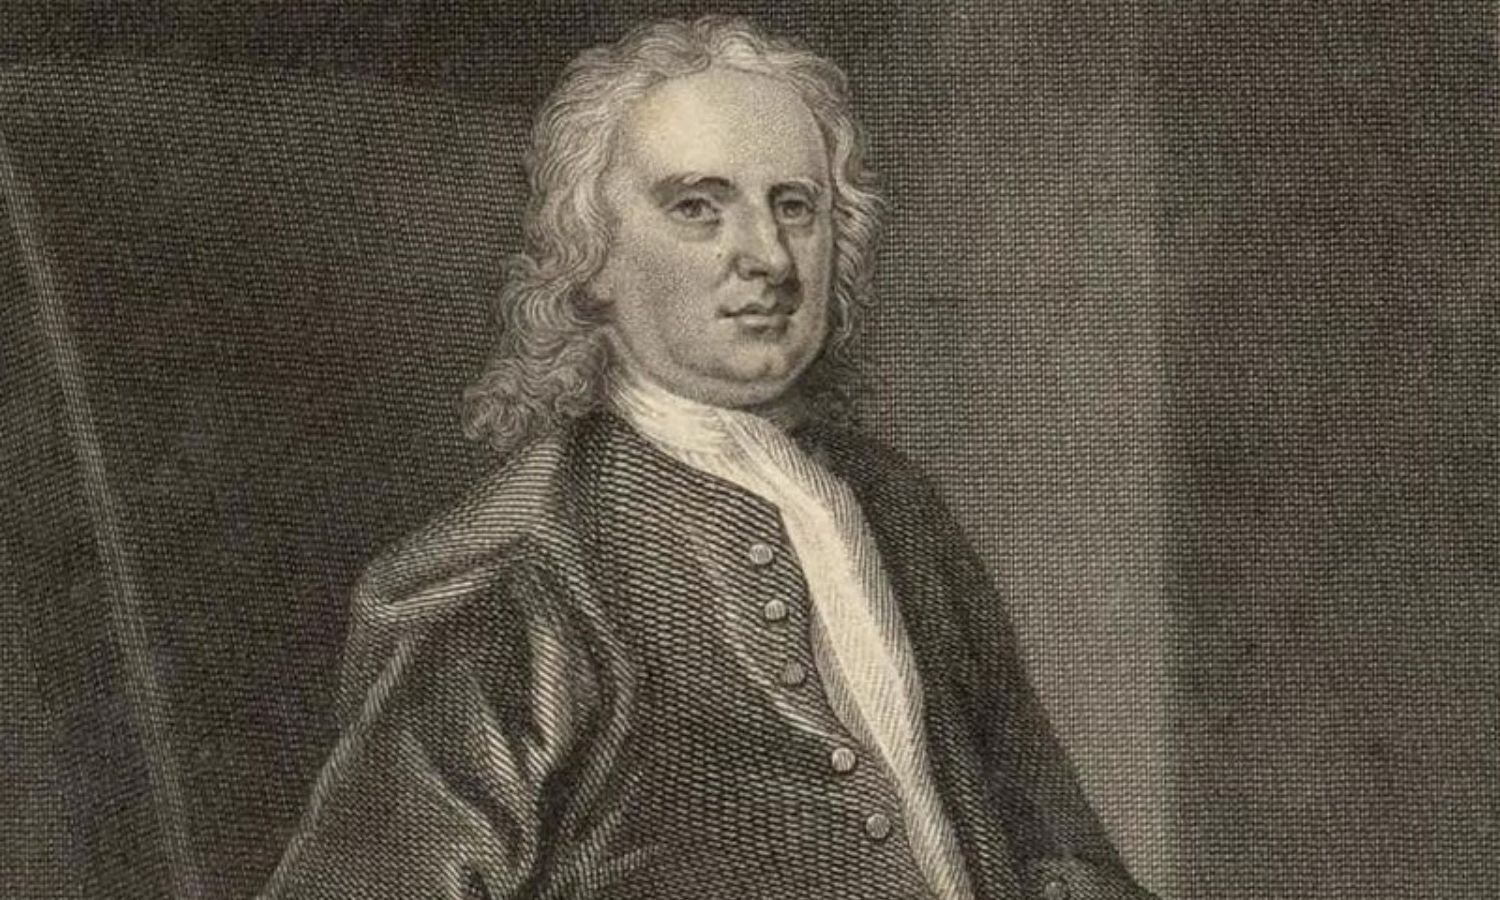 OTD in 1687: Sir Isaac Newton published his "Principia" book